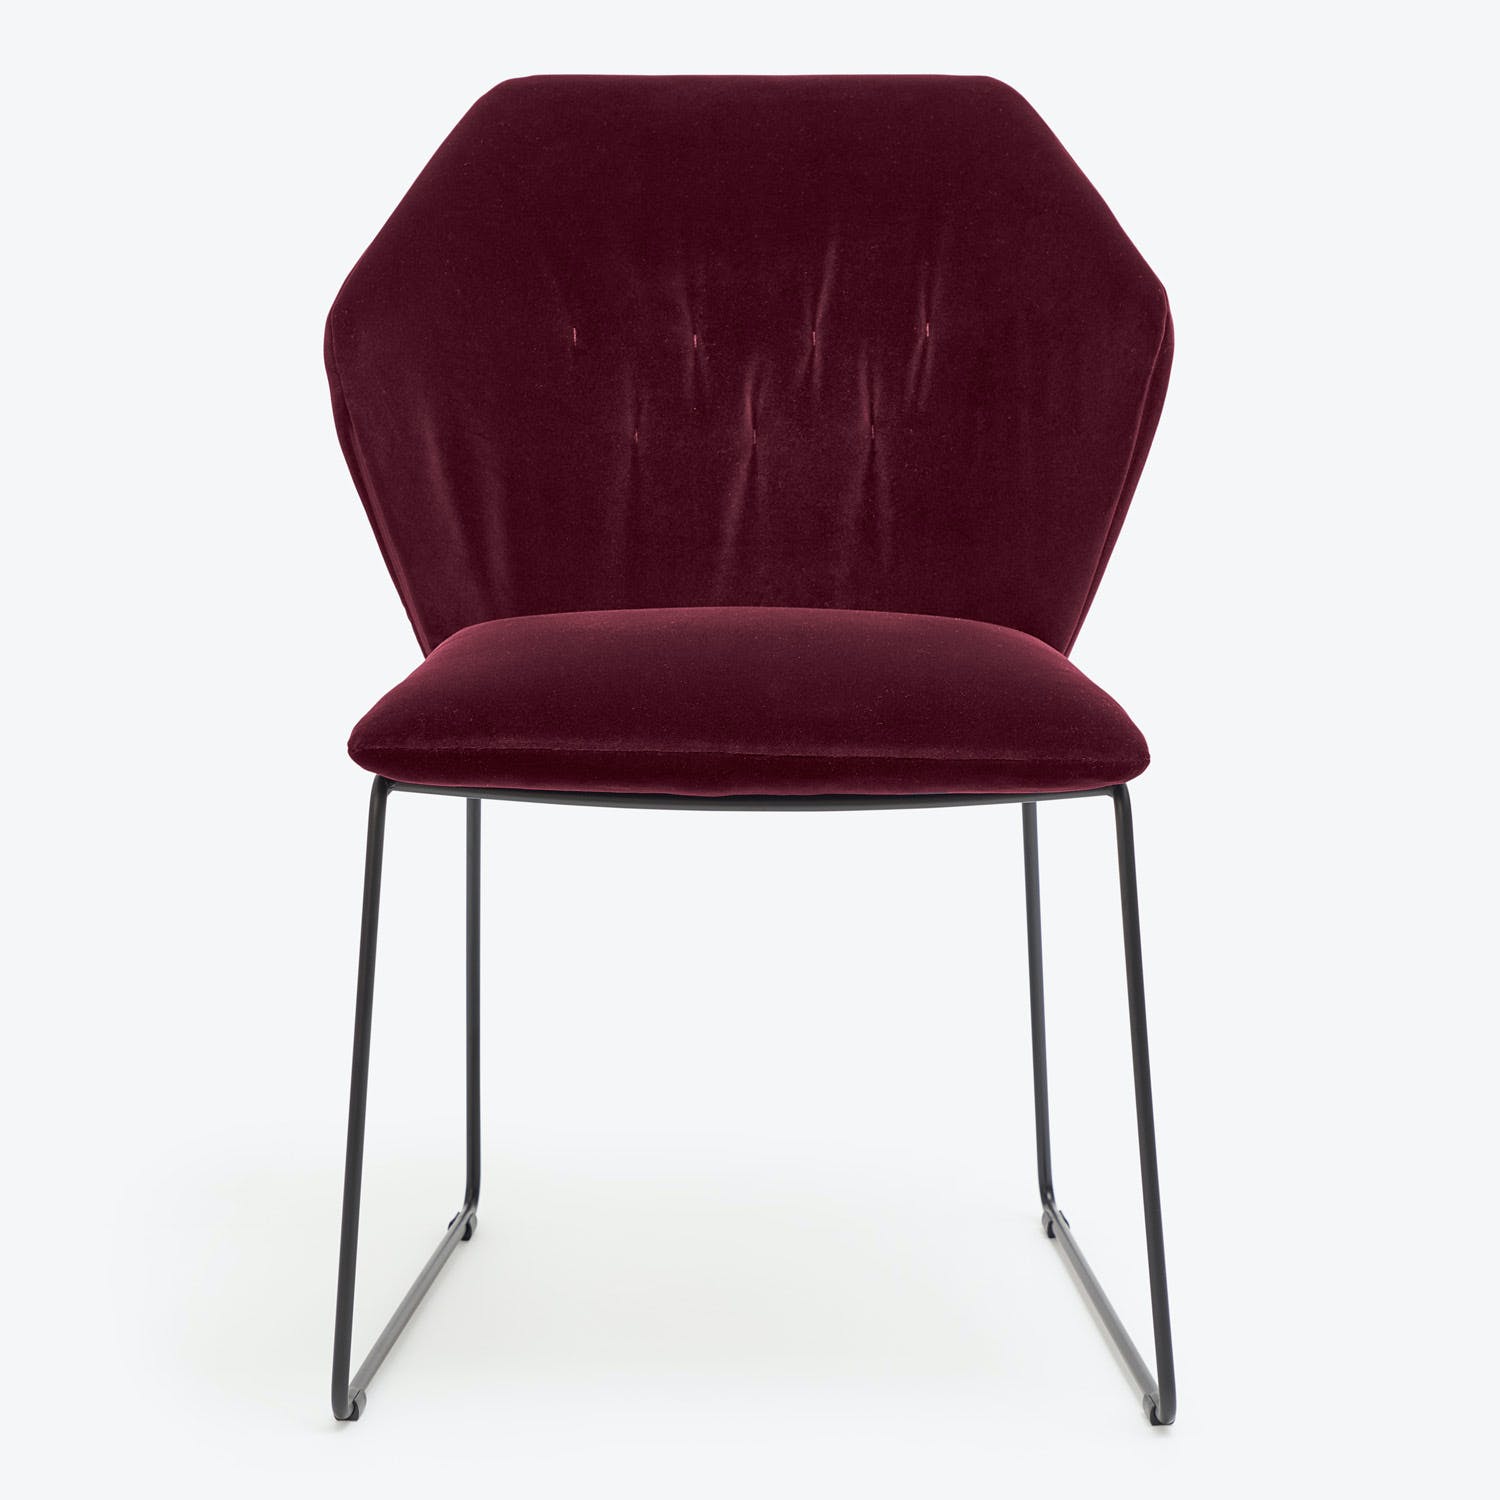 Minimalist burgundy chair with sleek metal legs offers modern elegance.